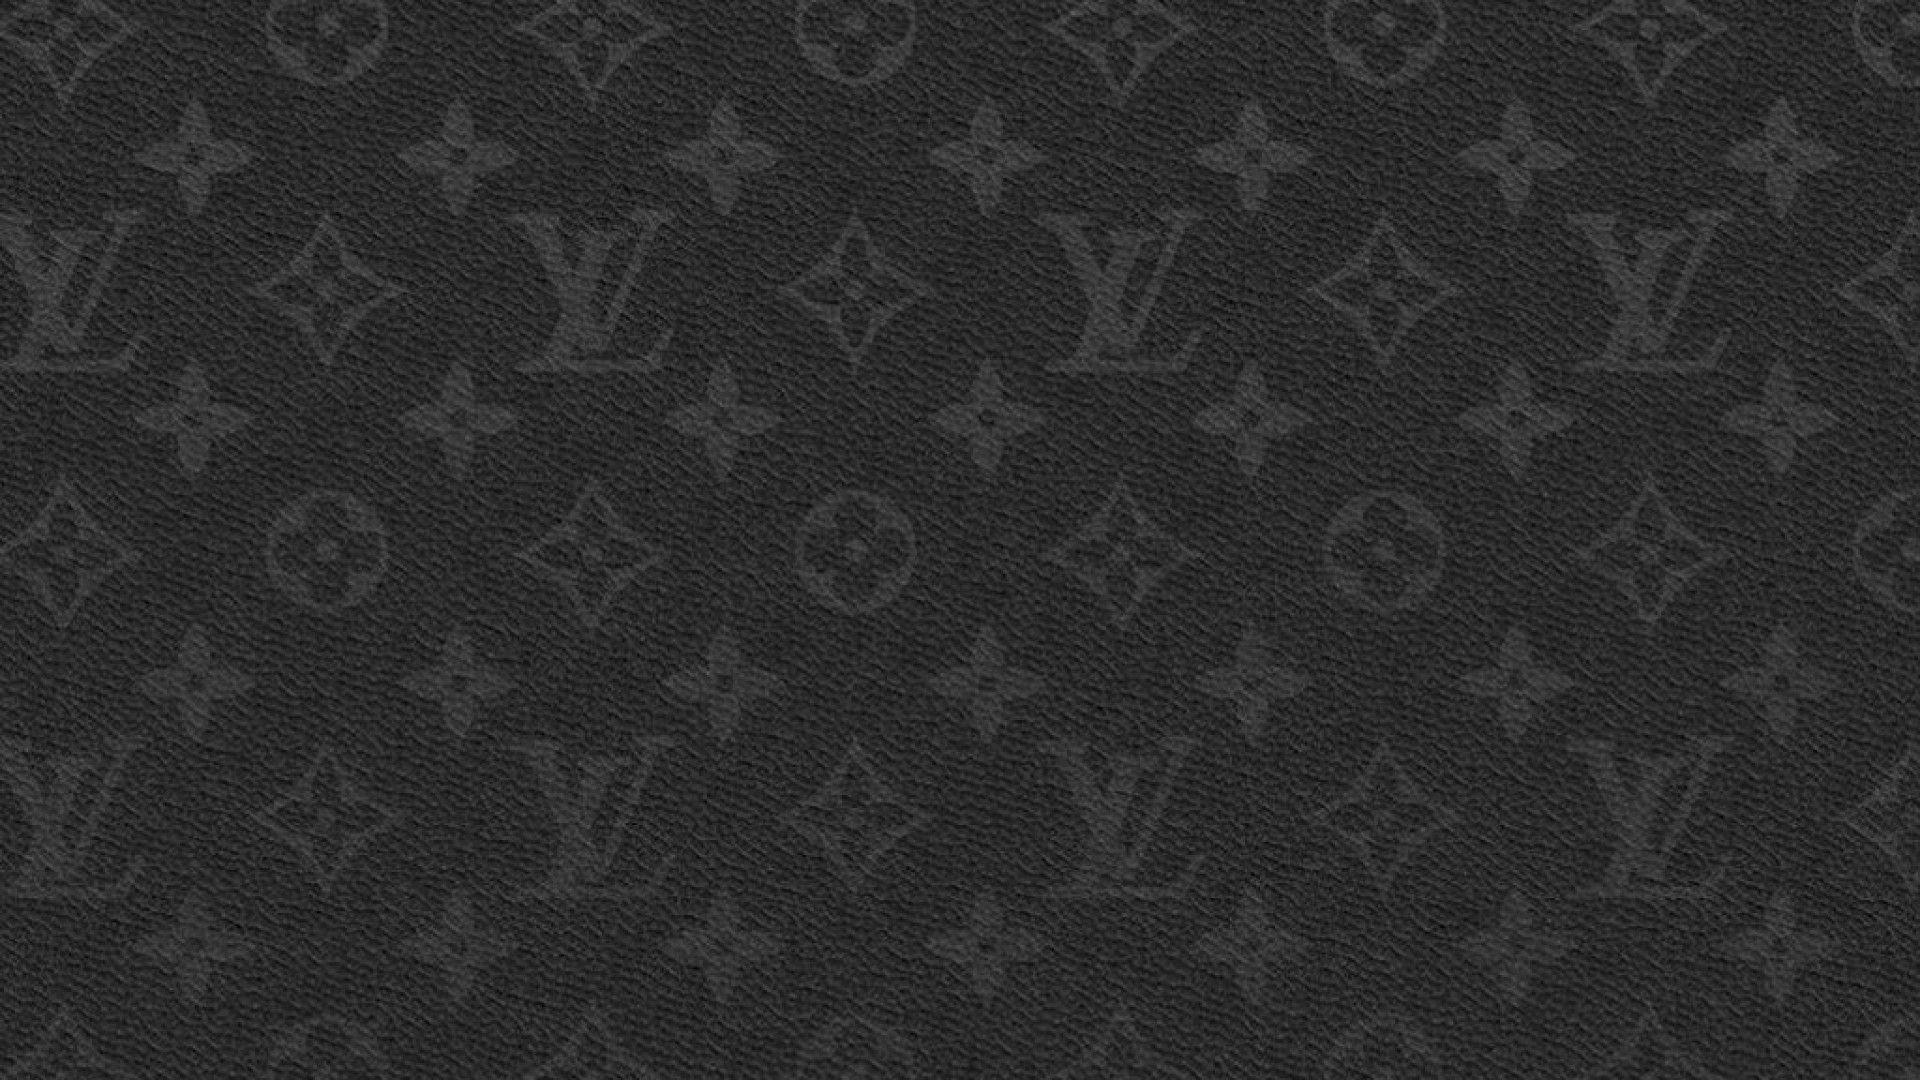 1920x1080 Hình nền Louis Vuitton tối cao